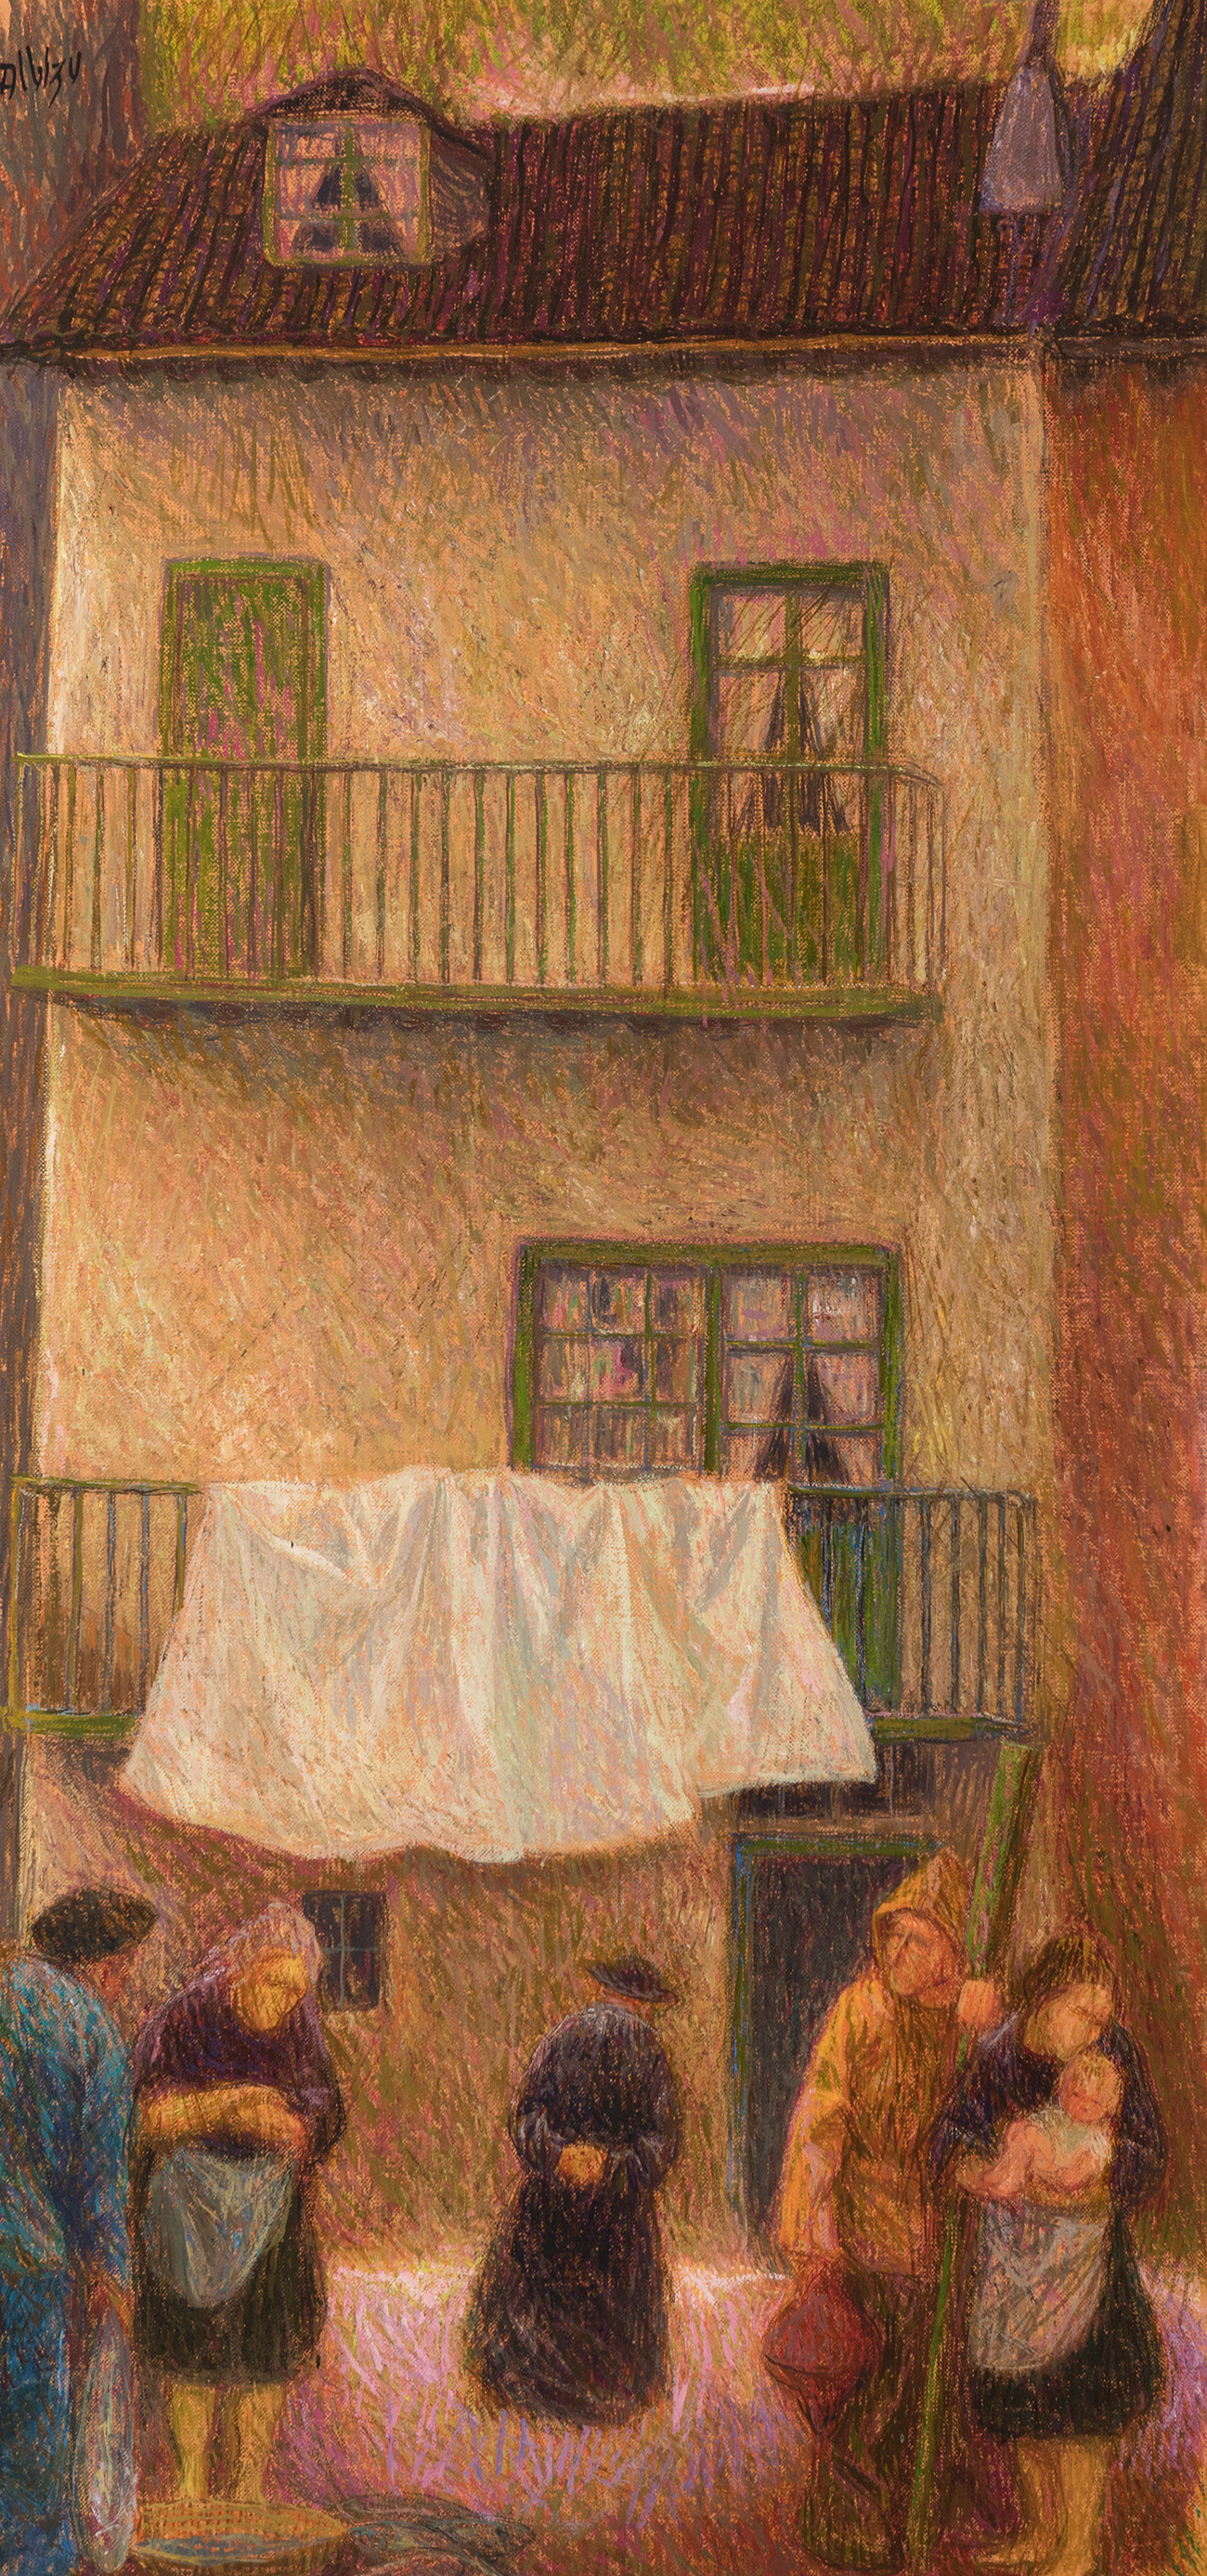 ENRIQUE ALBIZU (Valencia, 1926 - Fuenterrabía, 2014) ."Village scene".Oil on canvas.Signed in the